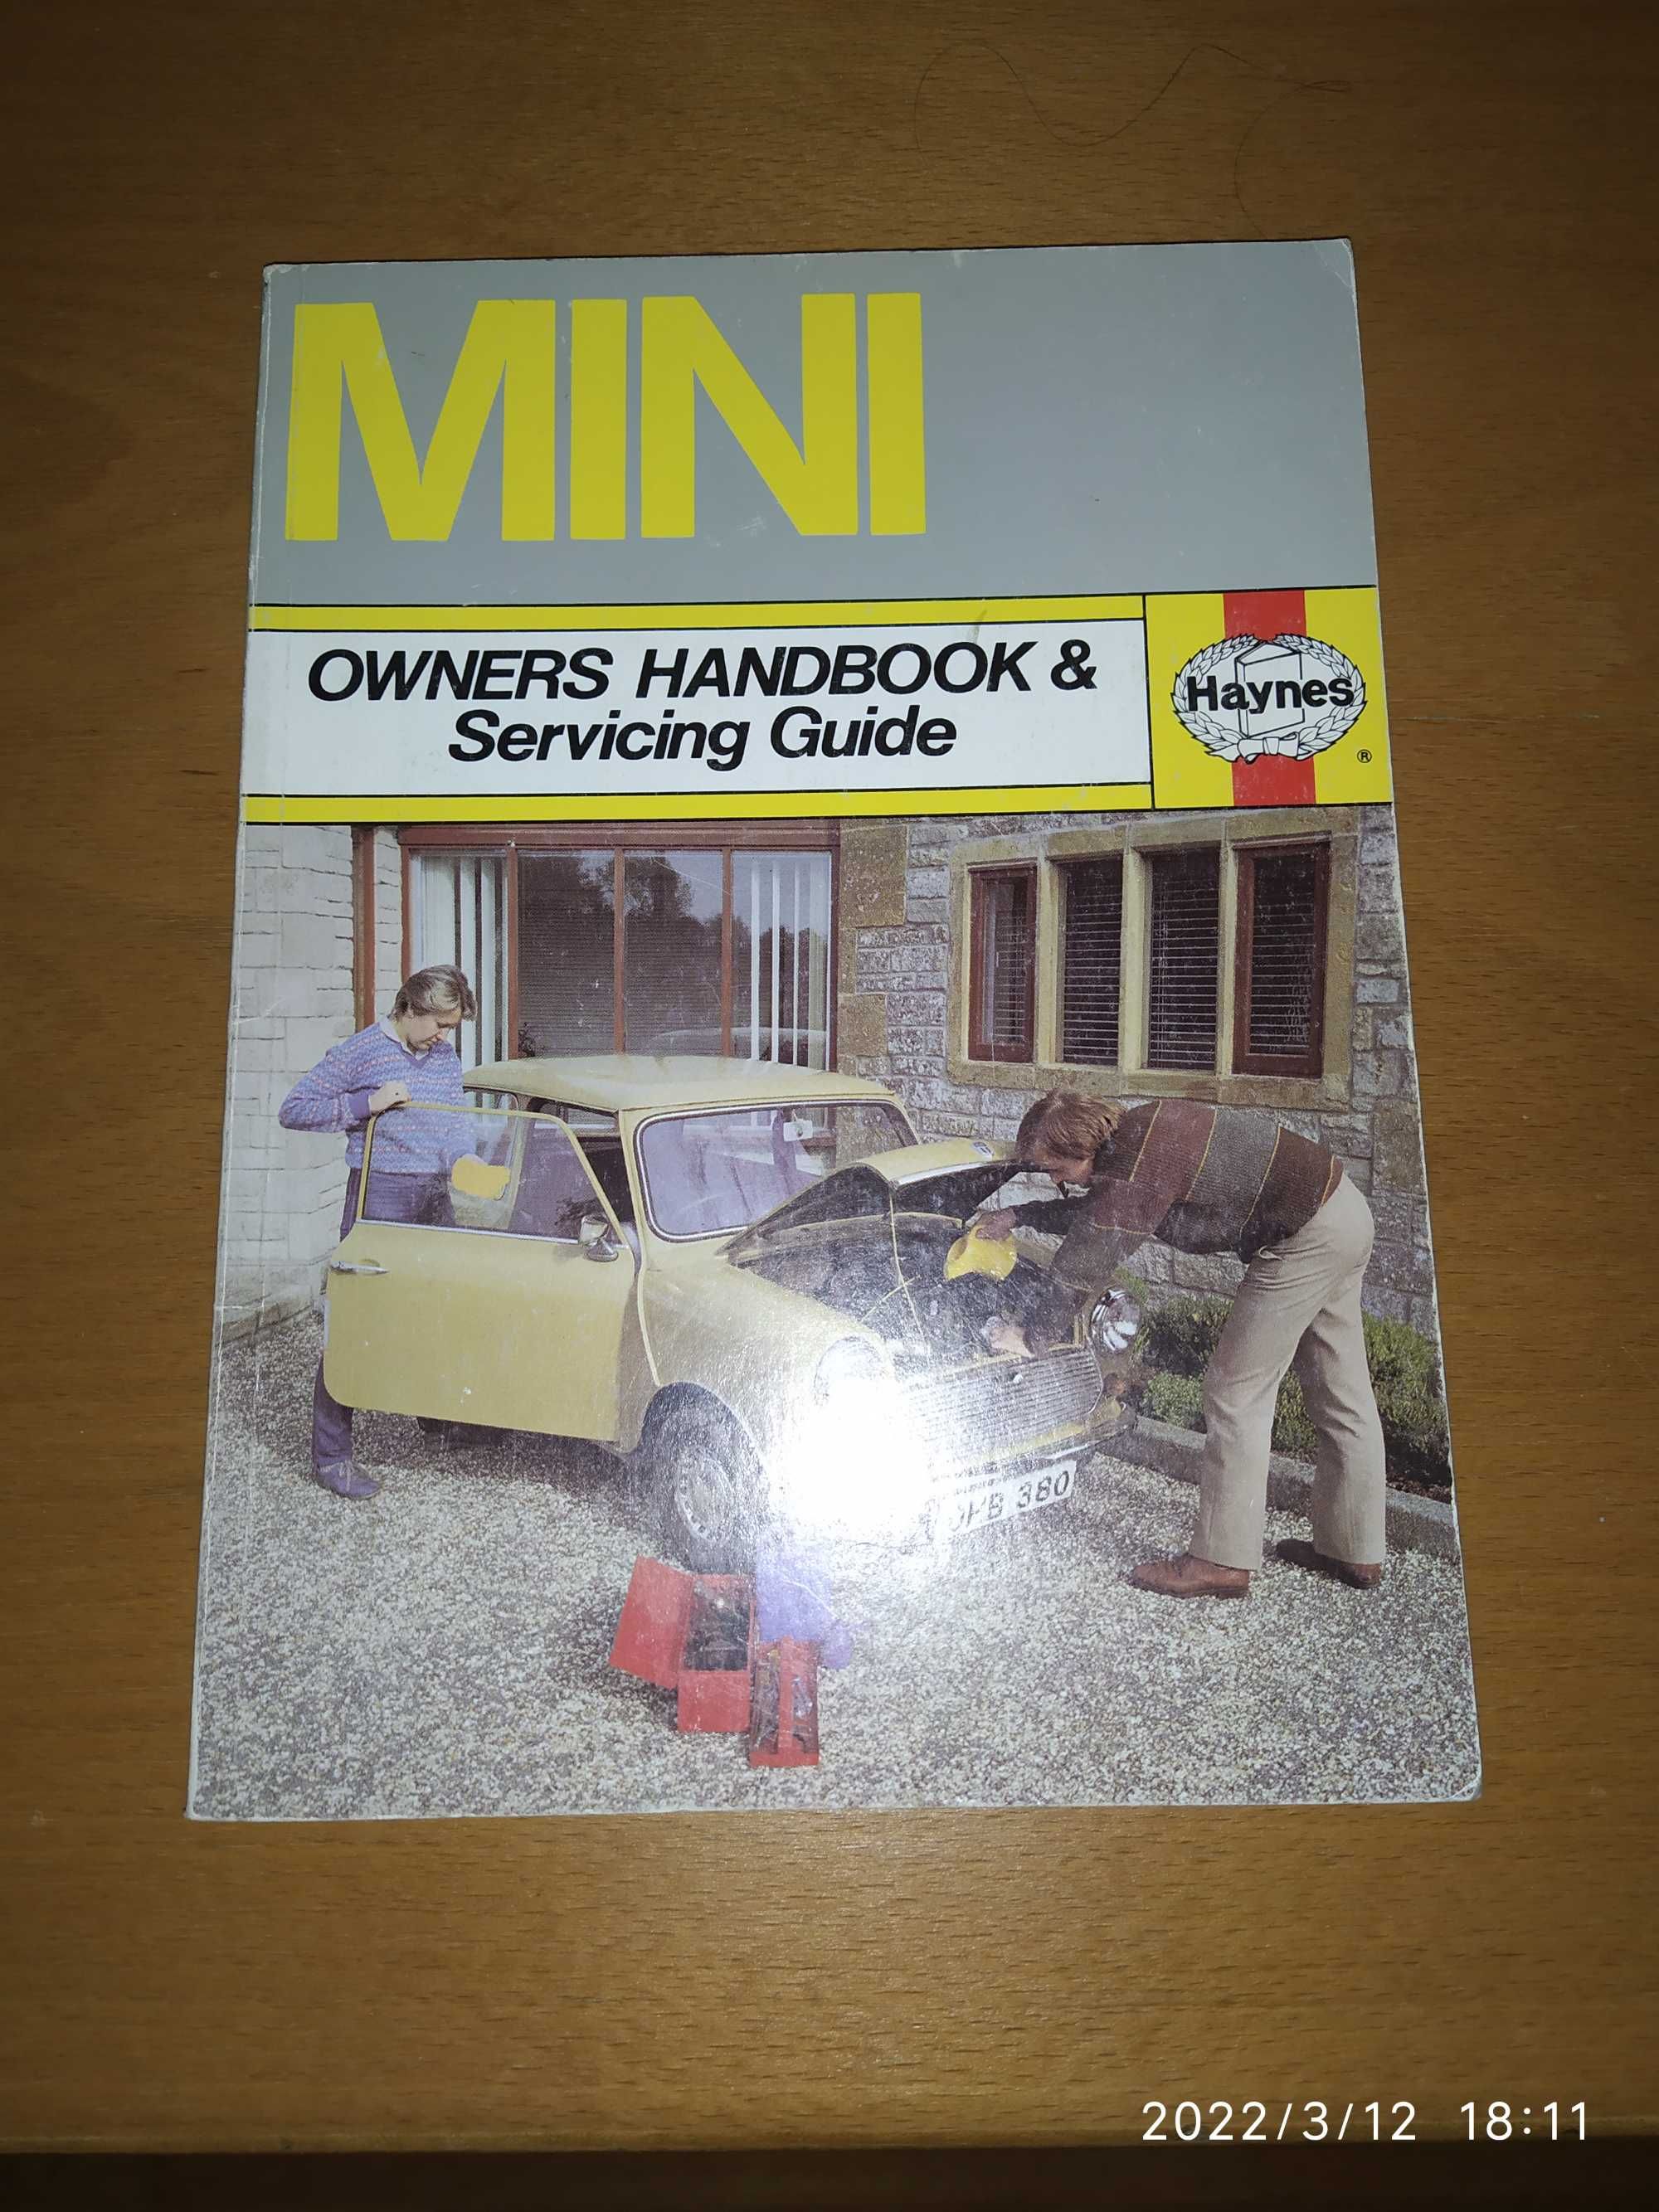 ## livro Mini owners handbook & servicing guide (haynes) ##